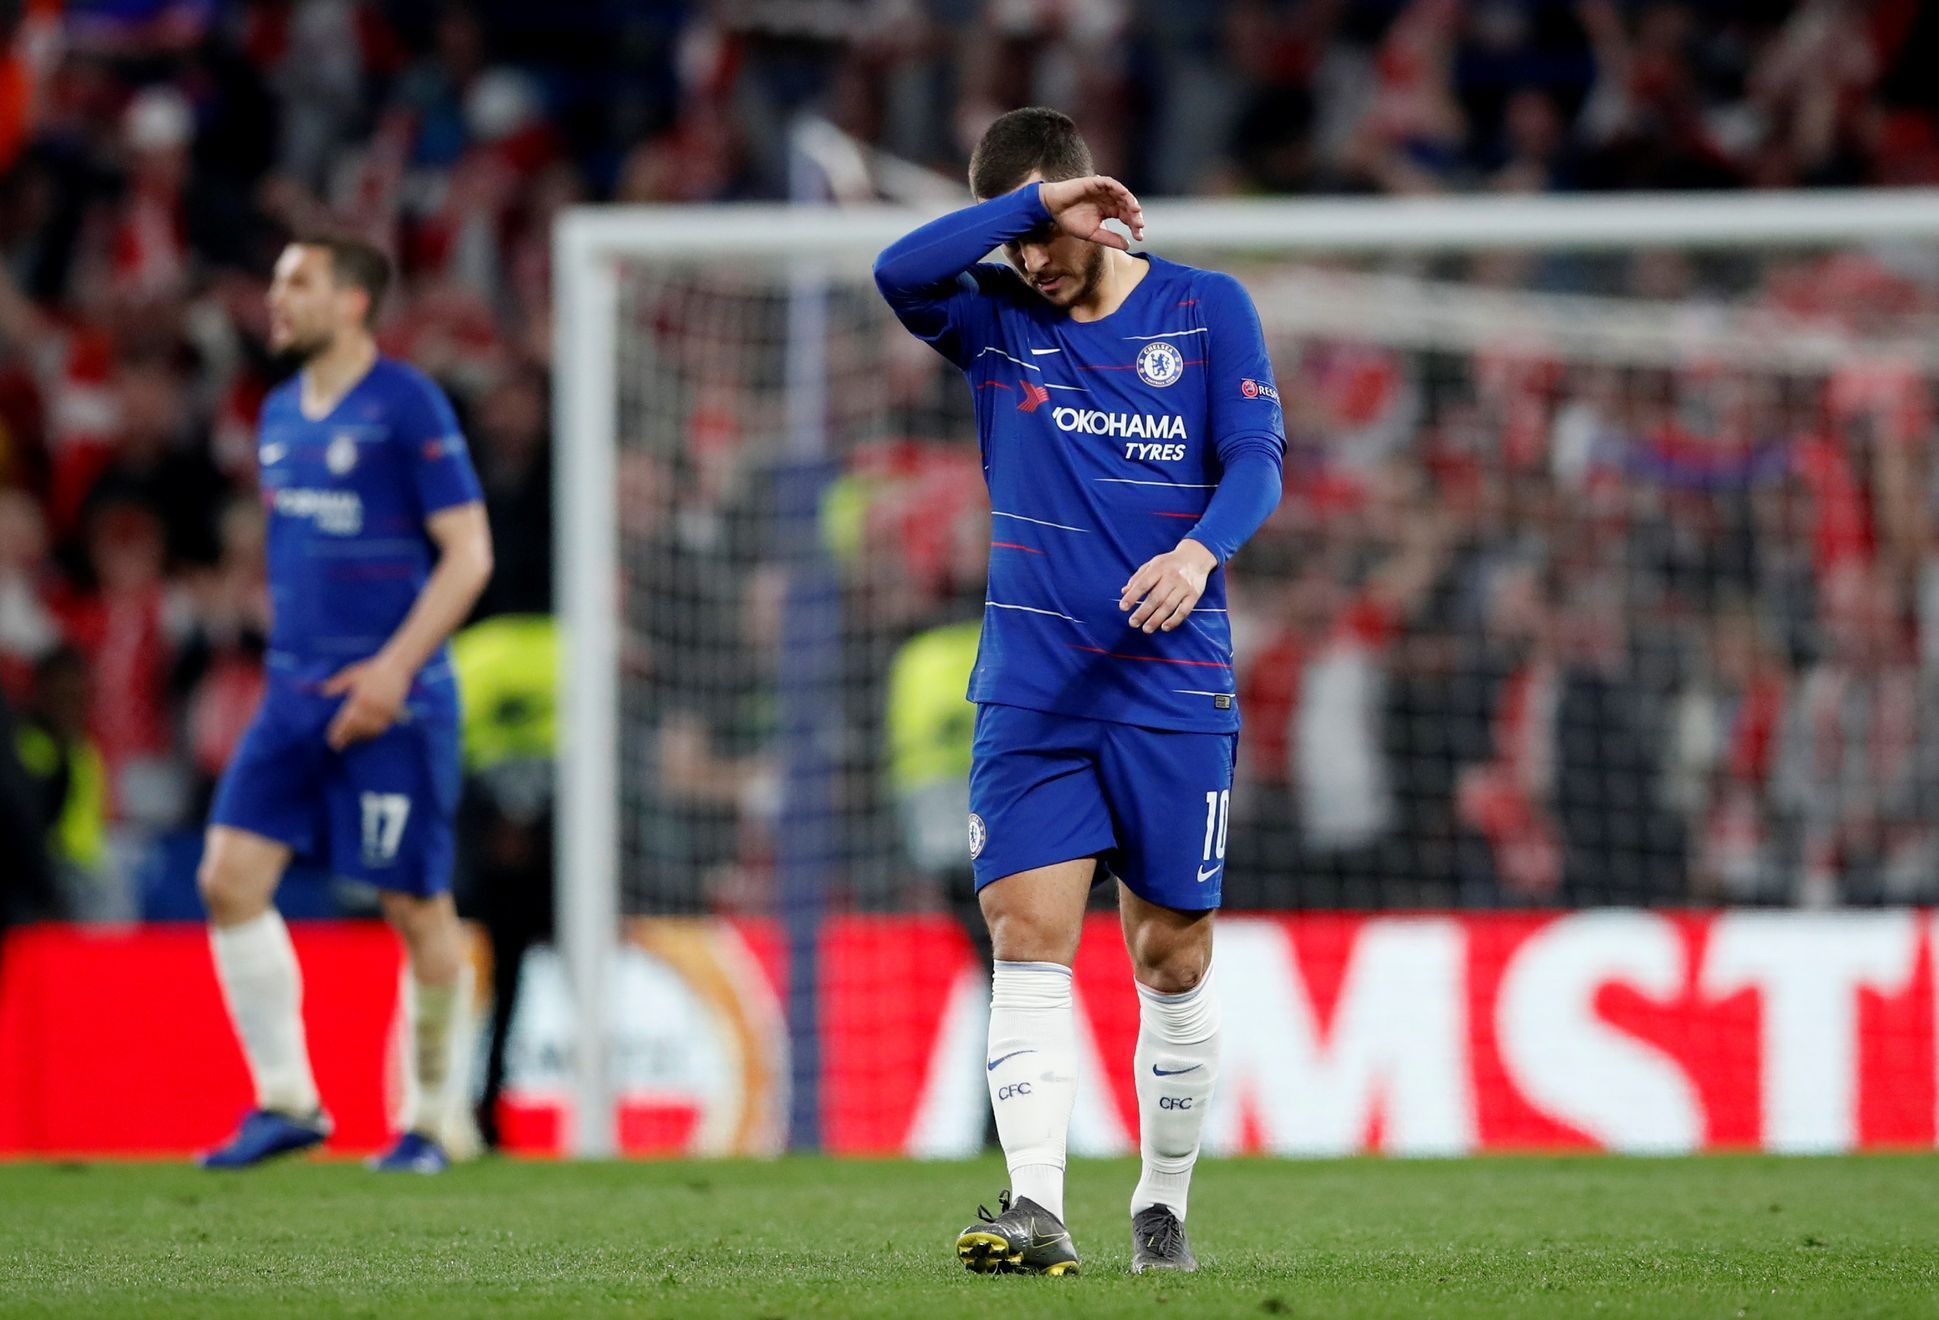 fotbal, odveta čtvrtfinále Evropské ligy, Chelsea - Slavia, Eden Hazard po inkasovaném gólu